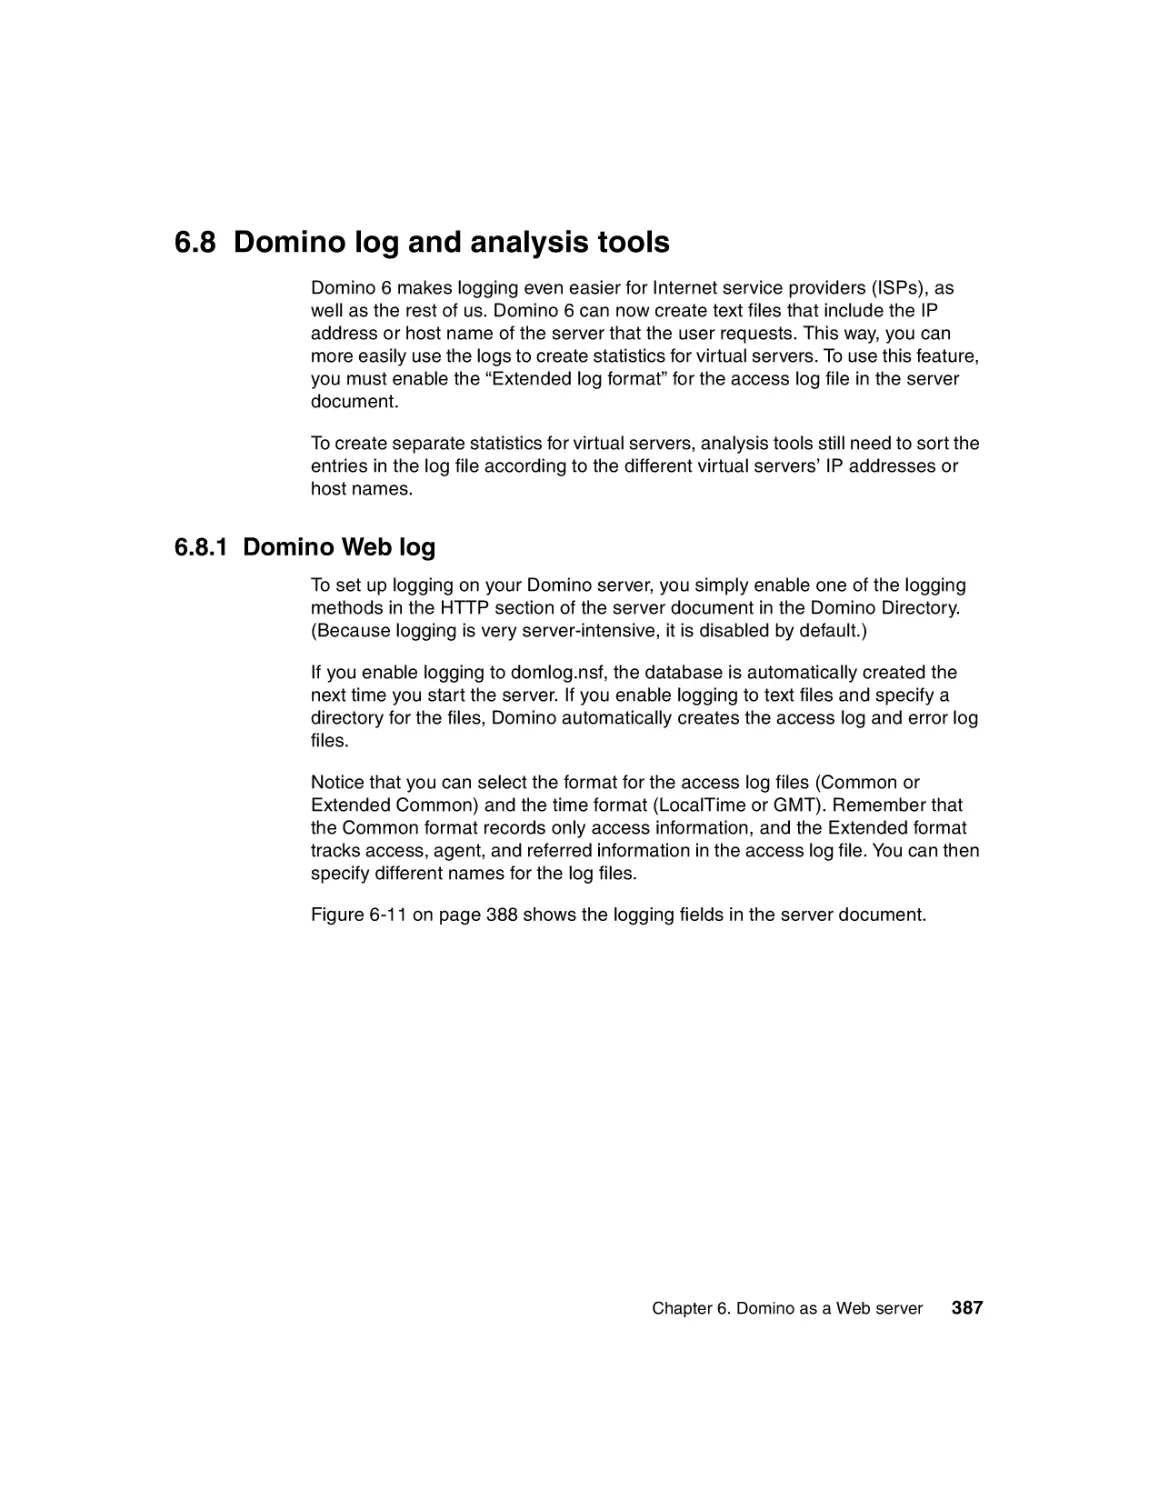 6.8 Domino log and analysis tools
6.8.1 Domino Web log